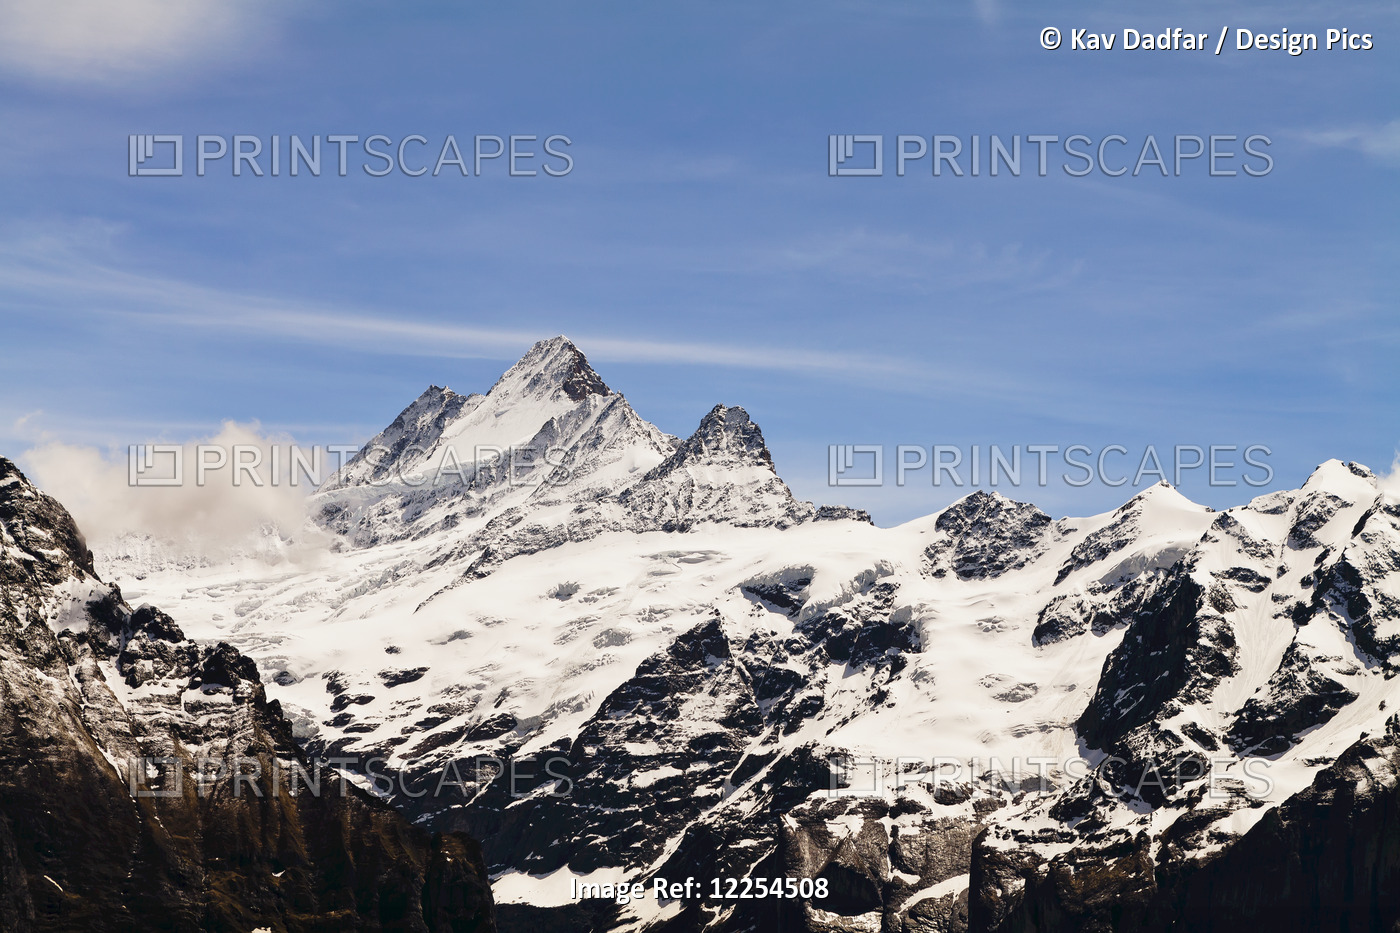 Jungfrau; Grindelwald, Bernese Oberland, Switzerland